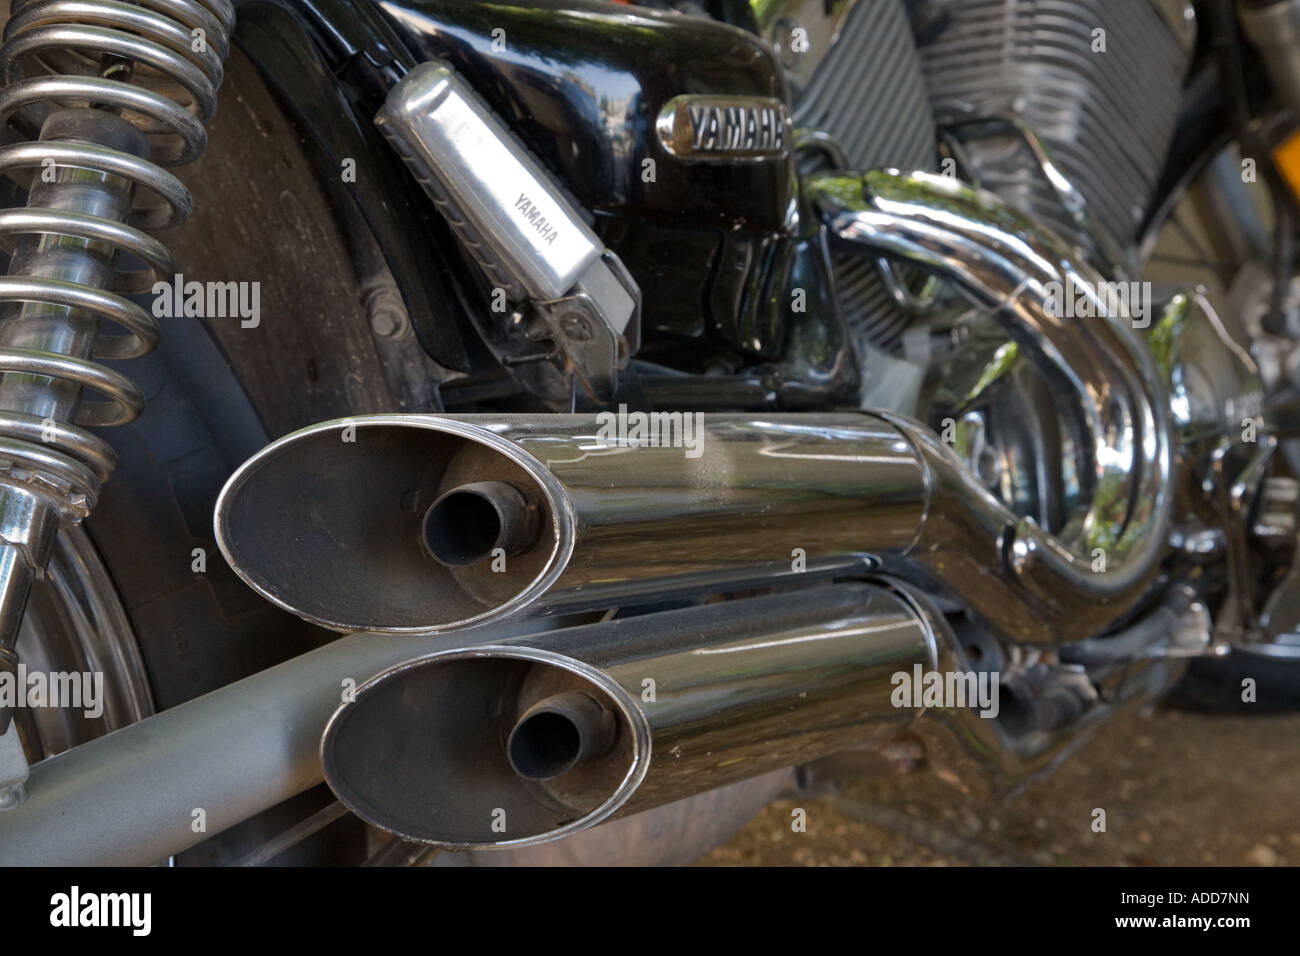 Stock photo of Yamaha Virago motorcycle dual exhaust pipes Shot July 2007 Stock Photo